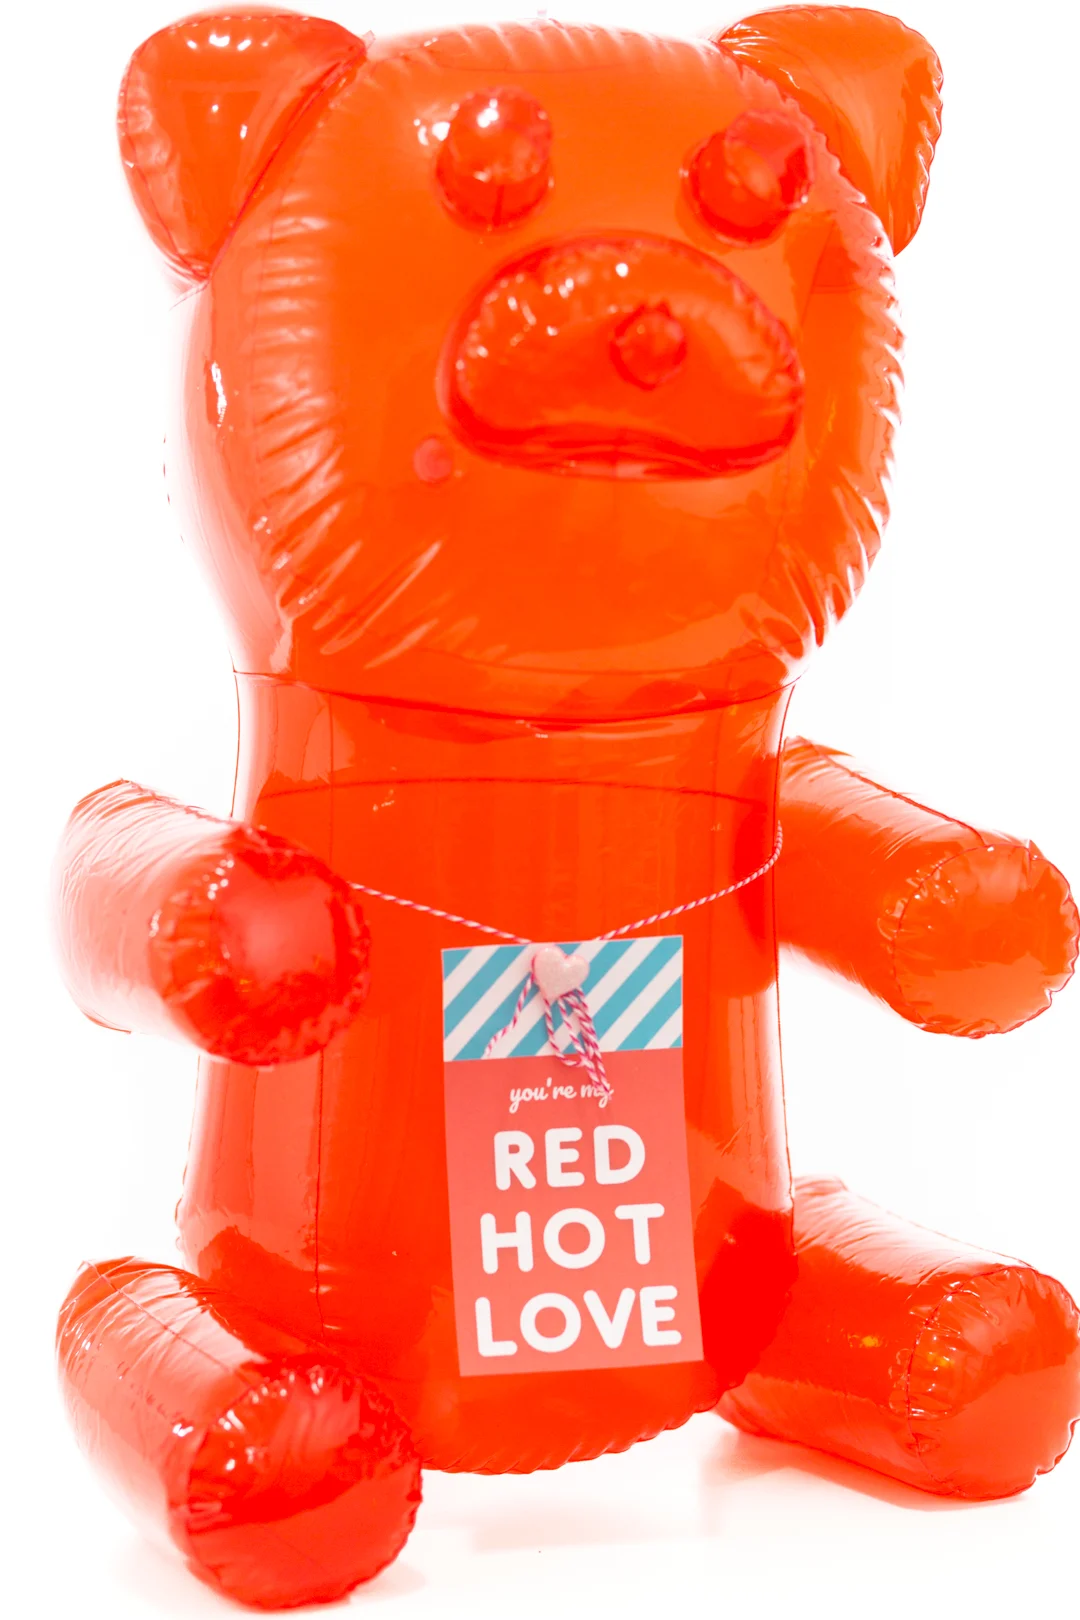 Red hot love = cute blow up gummy bear gift idea.